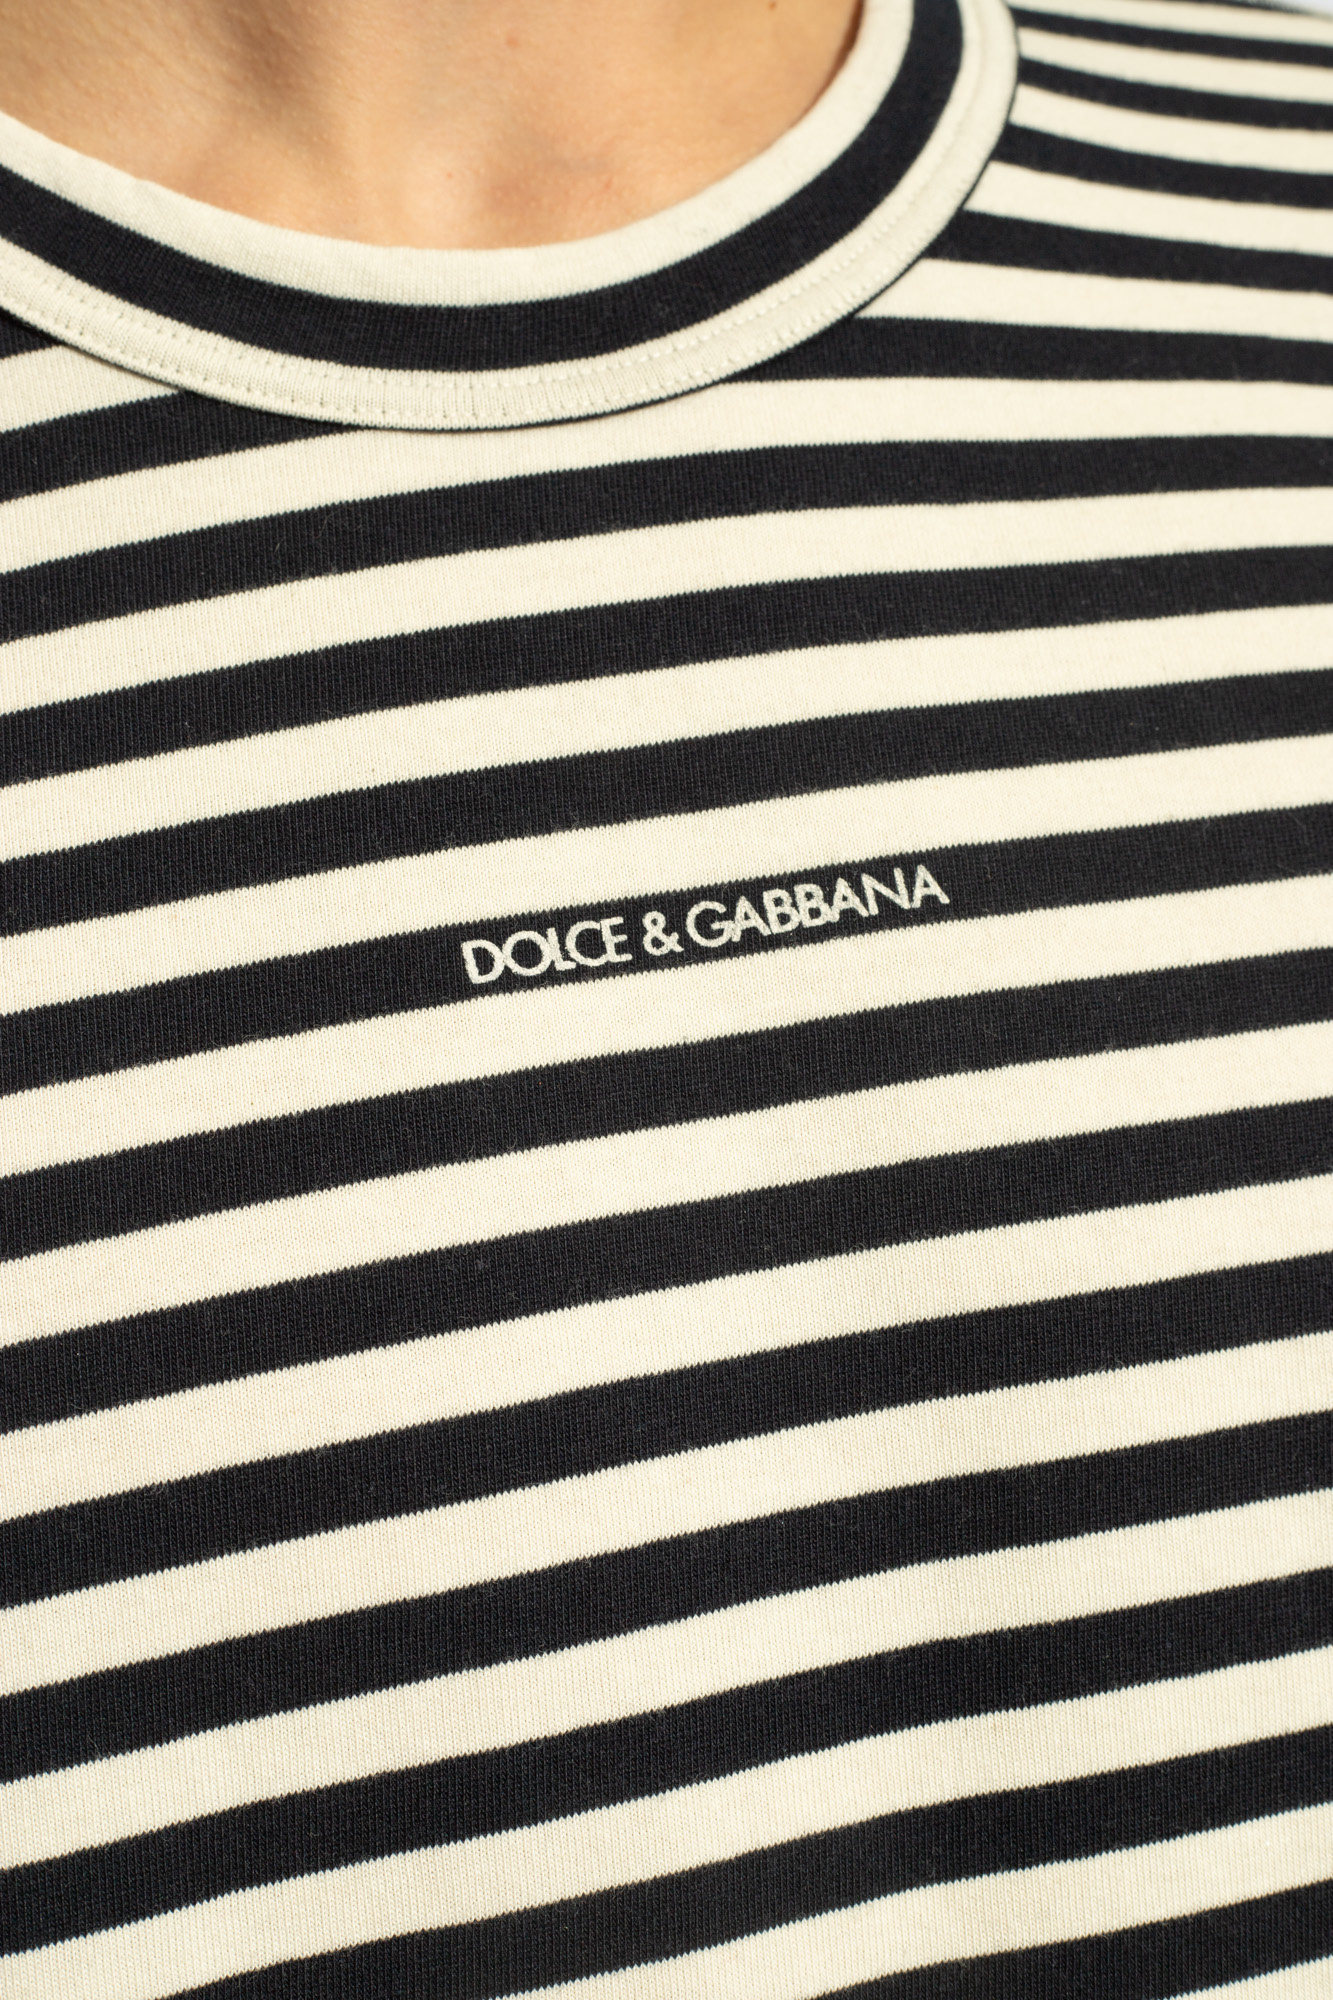 dolce gabbana kids graffiti print tote bag item Striped T-shirt